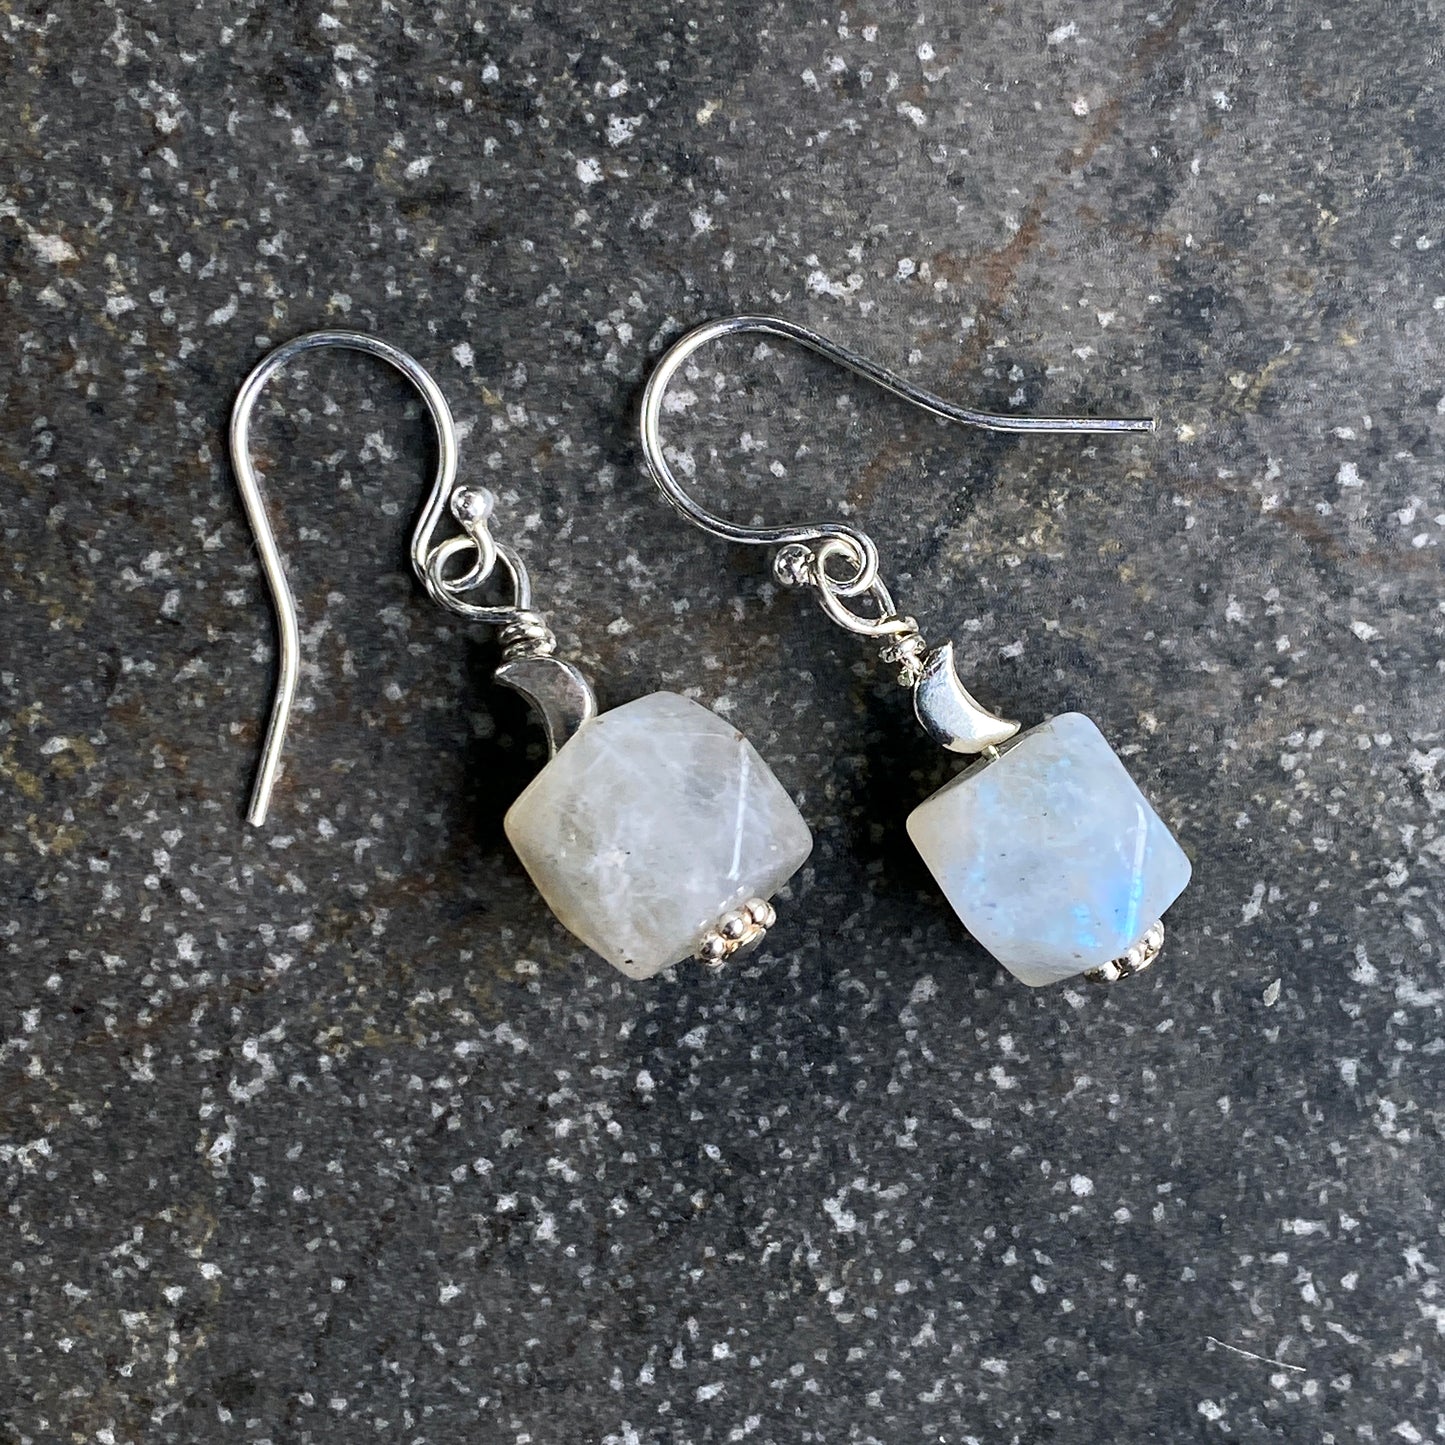 Labradorite gemstones with silver Moon Dangle earrings